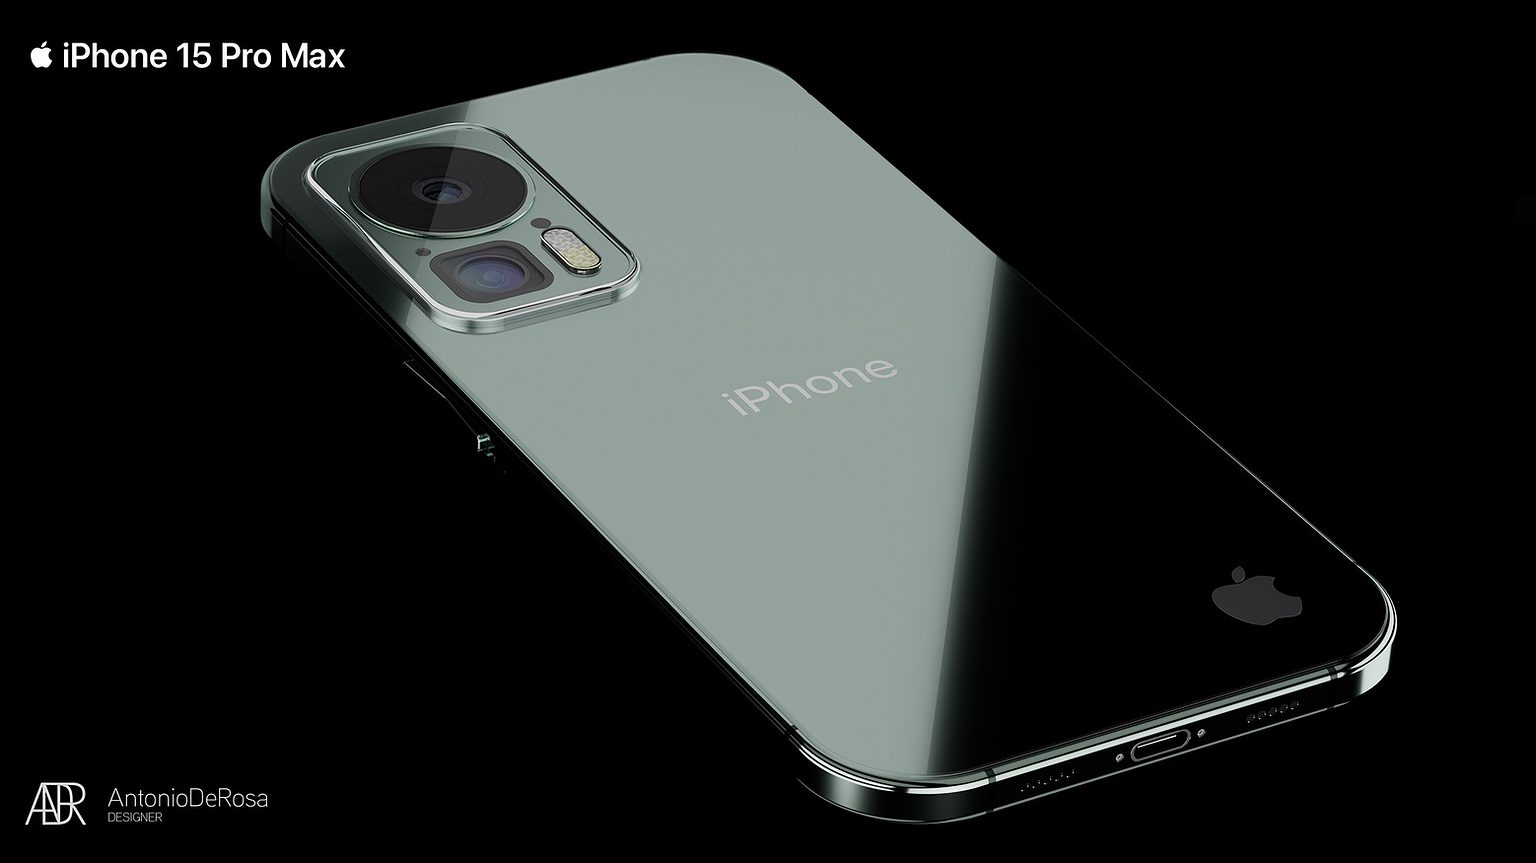 Marvelous iPhone 15 concept showcases sleek new design